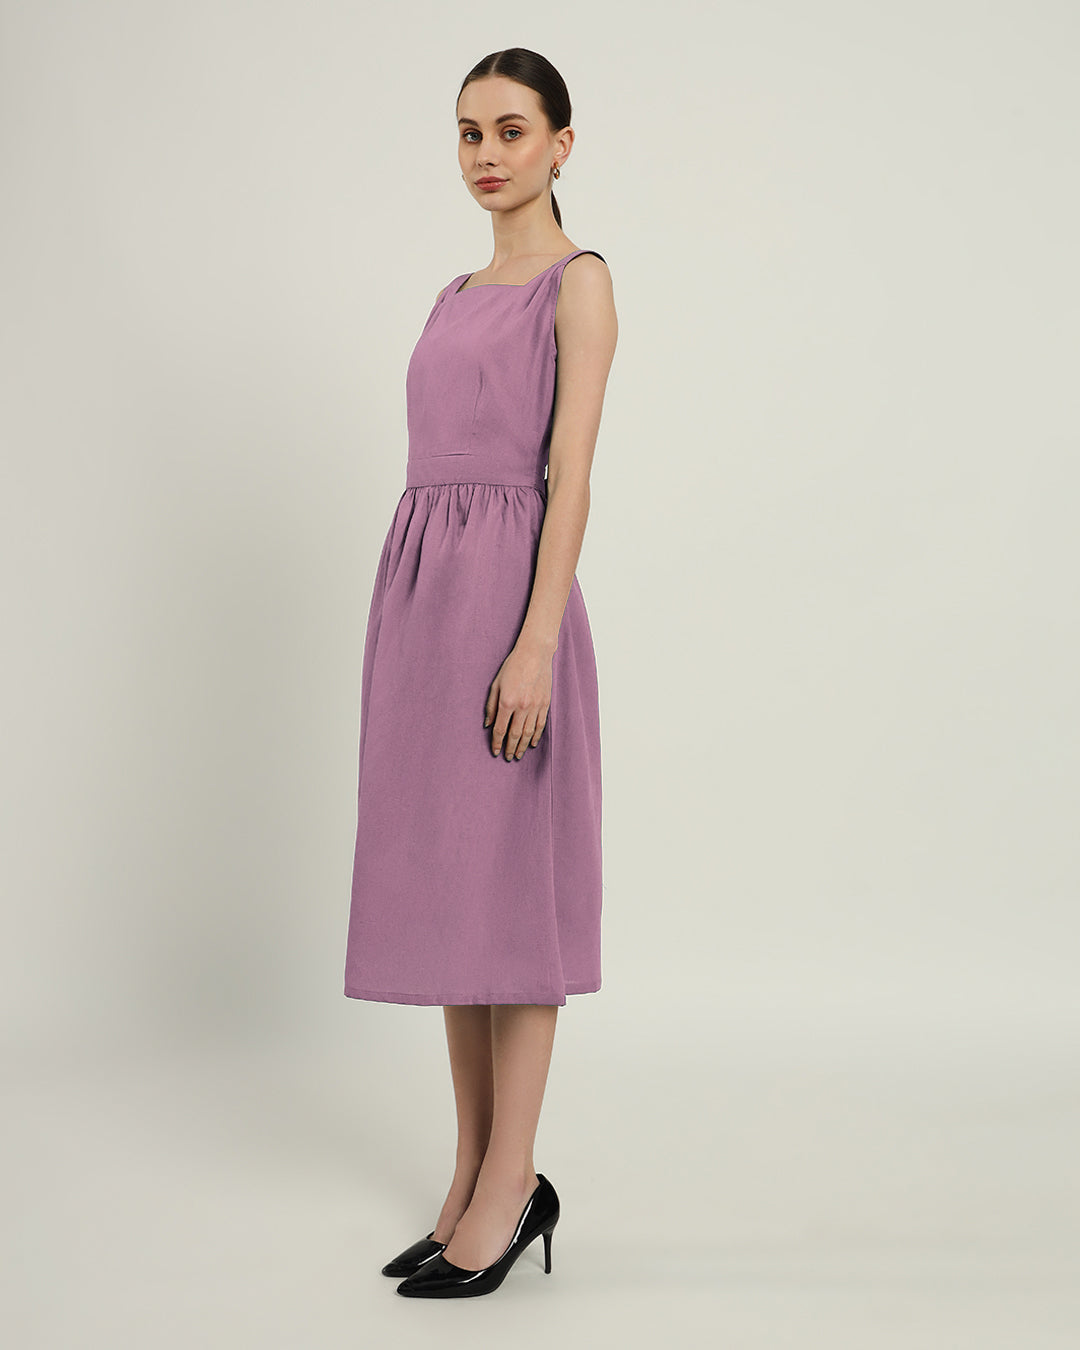 The Mihara Purple Swirl Cotton Dress